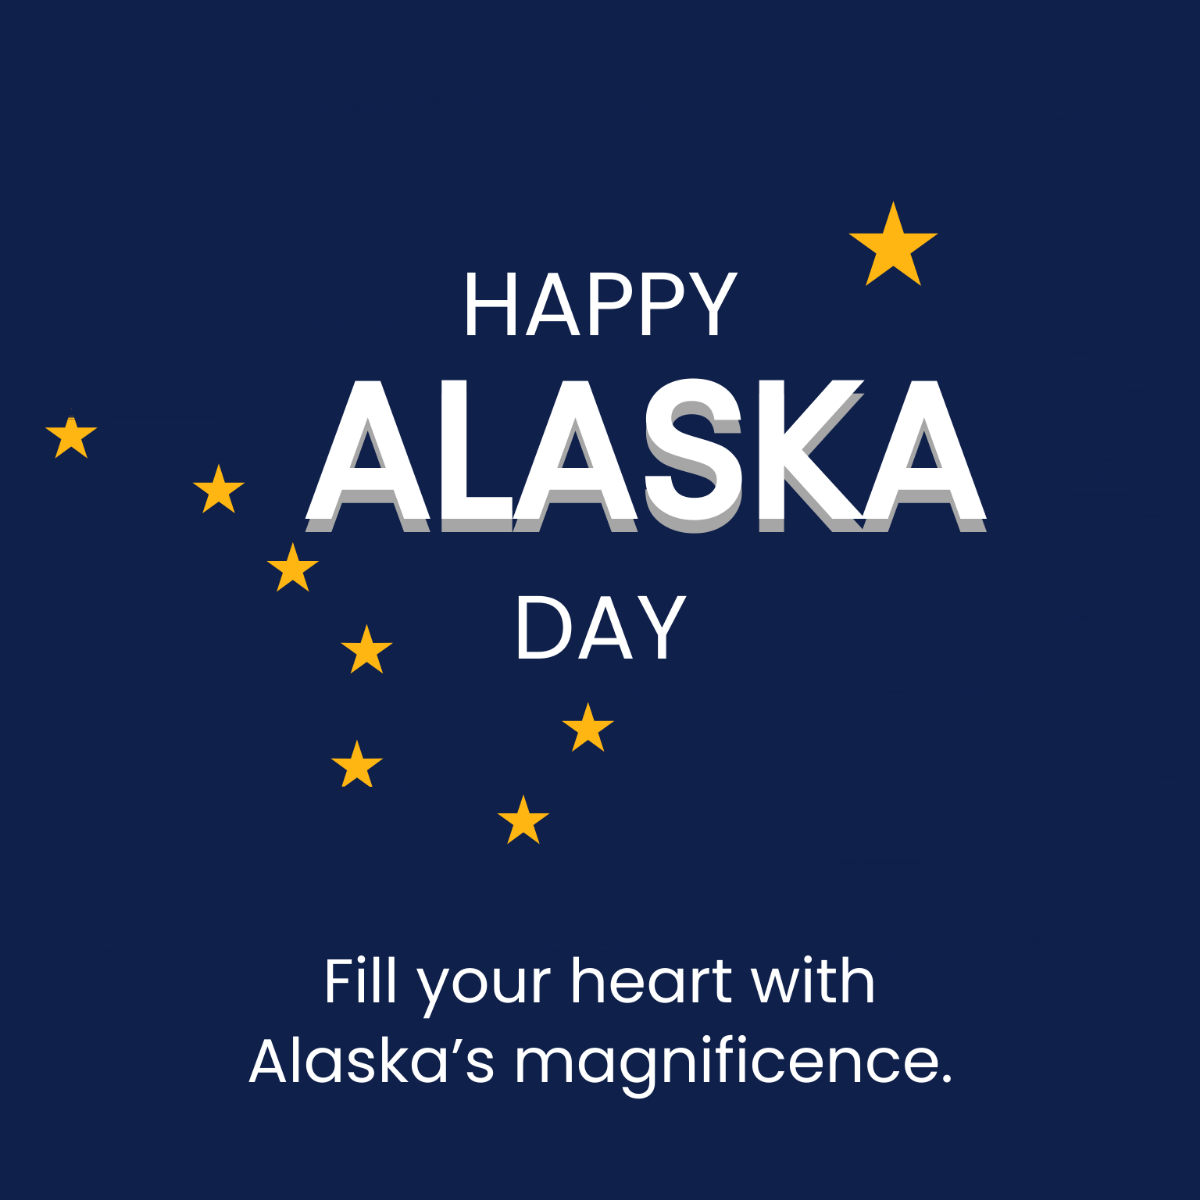 Free Alaska Day Greeting Card Vector Template